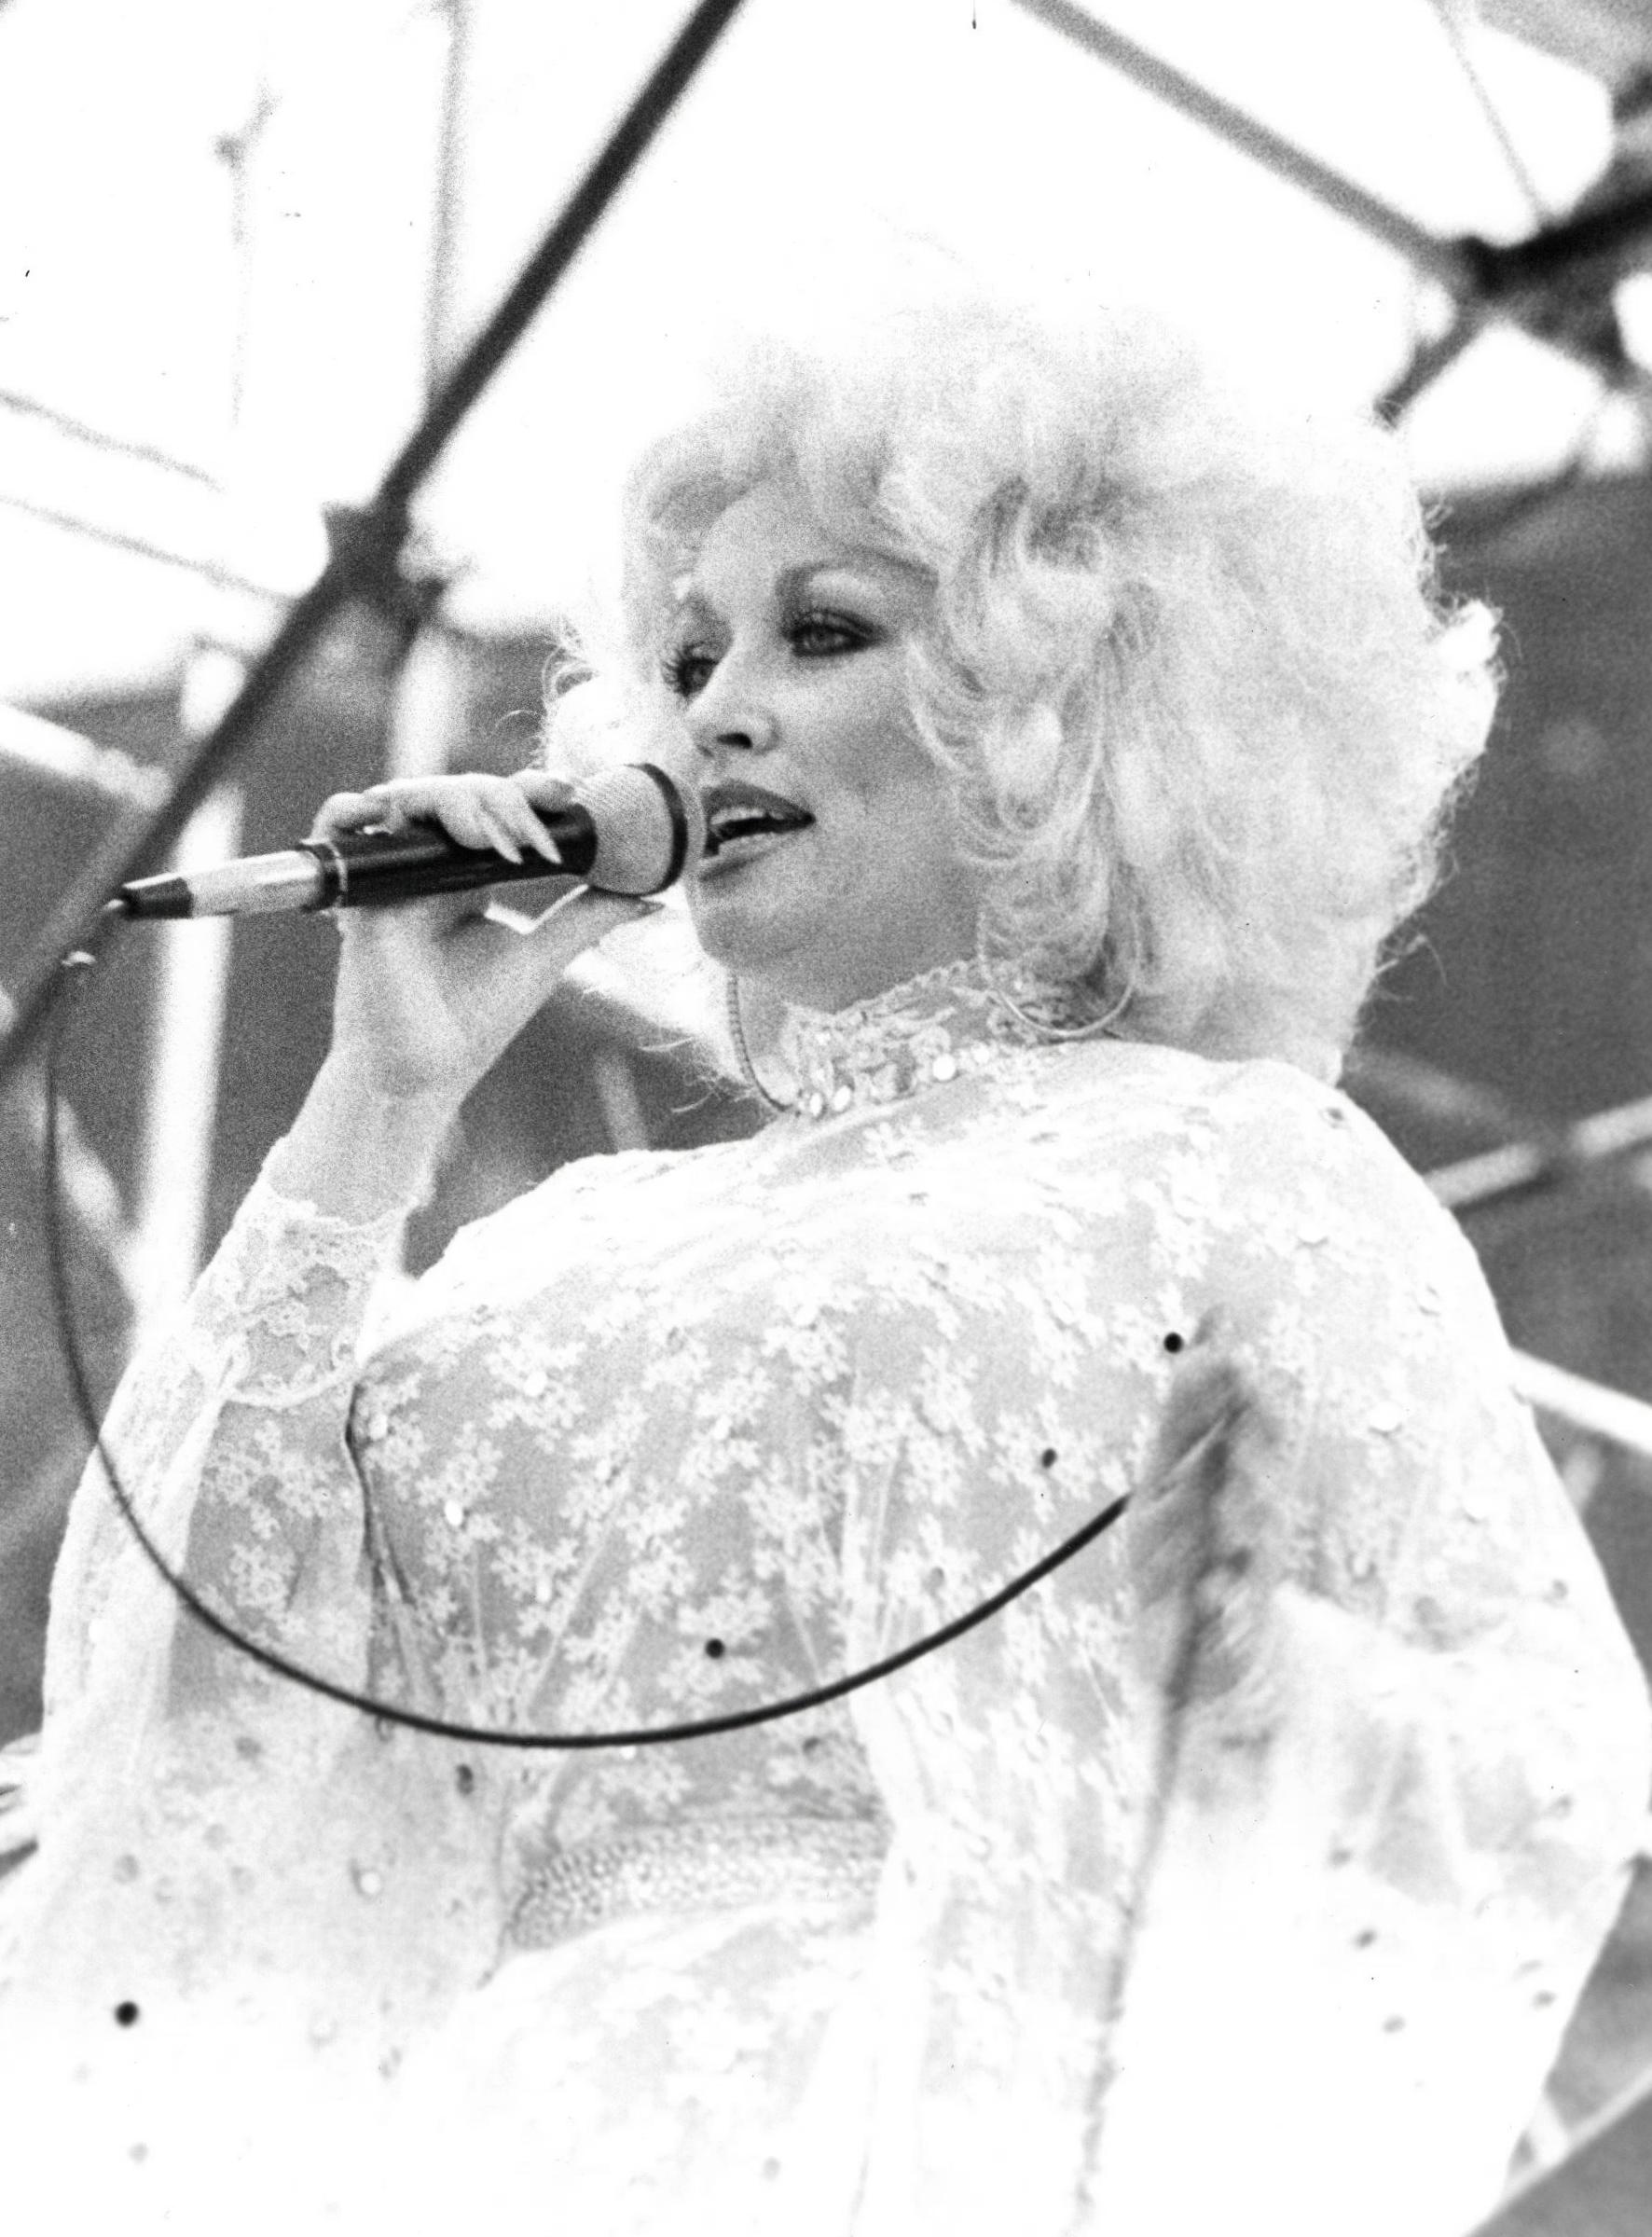 Chris Walter Portrait Photograph - Dolly Parton Singing into Microphone Vintage Original Photograph